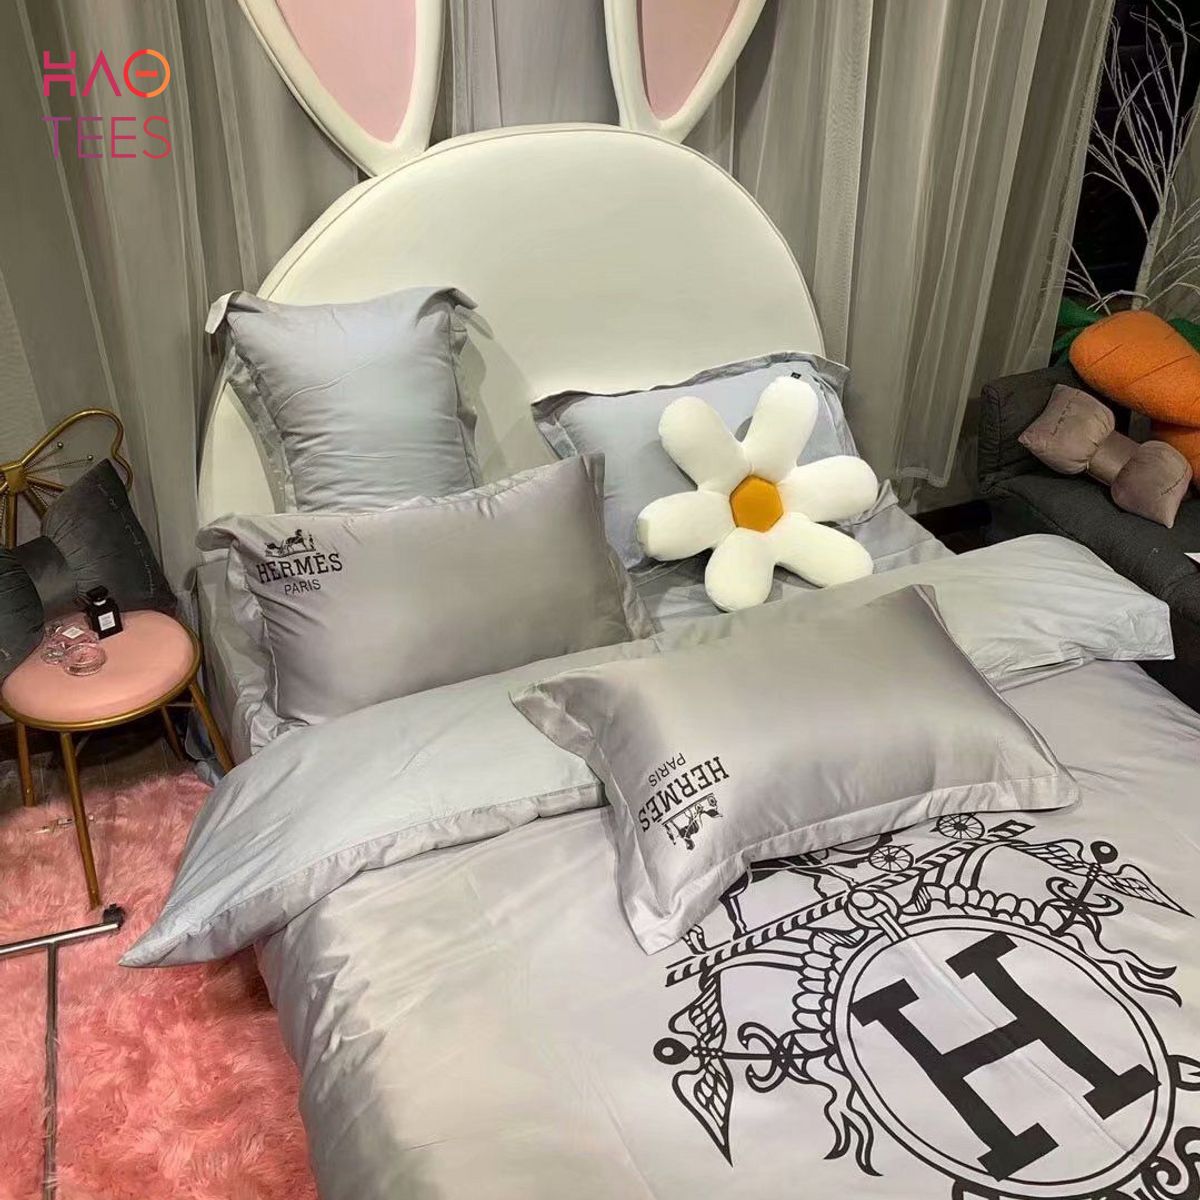 HOT Hermes Paris Luxury Brand Bedding Sets And Bedroom Sets